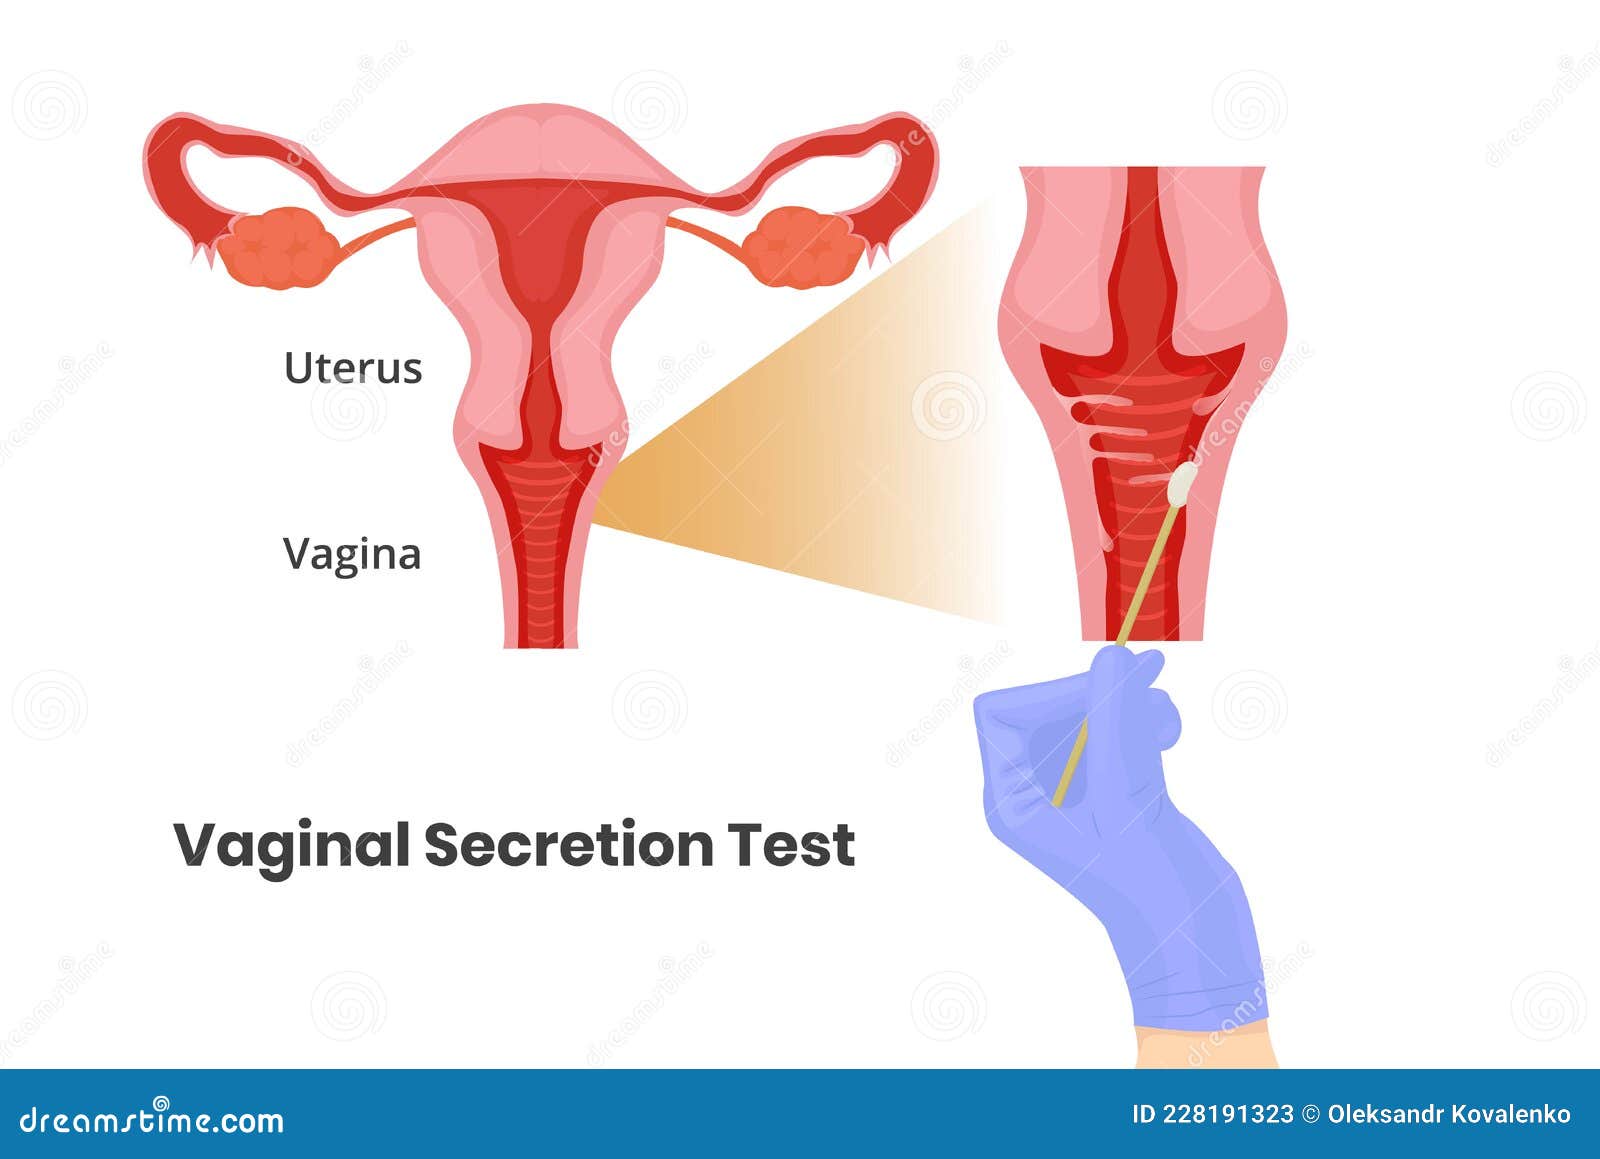 vaginal secretion test. vaginal swab vecor 